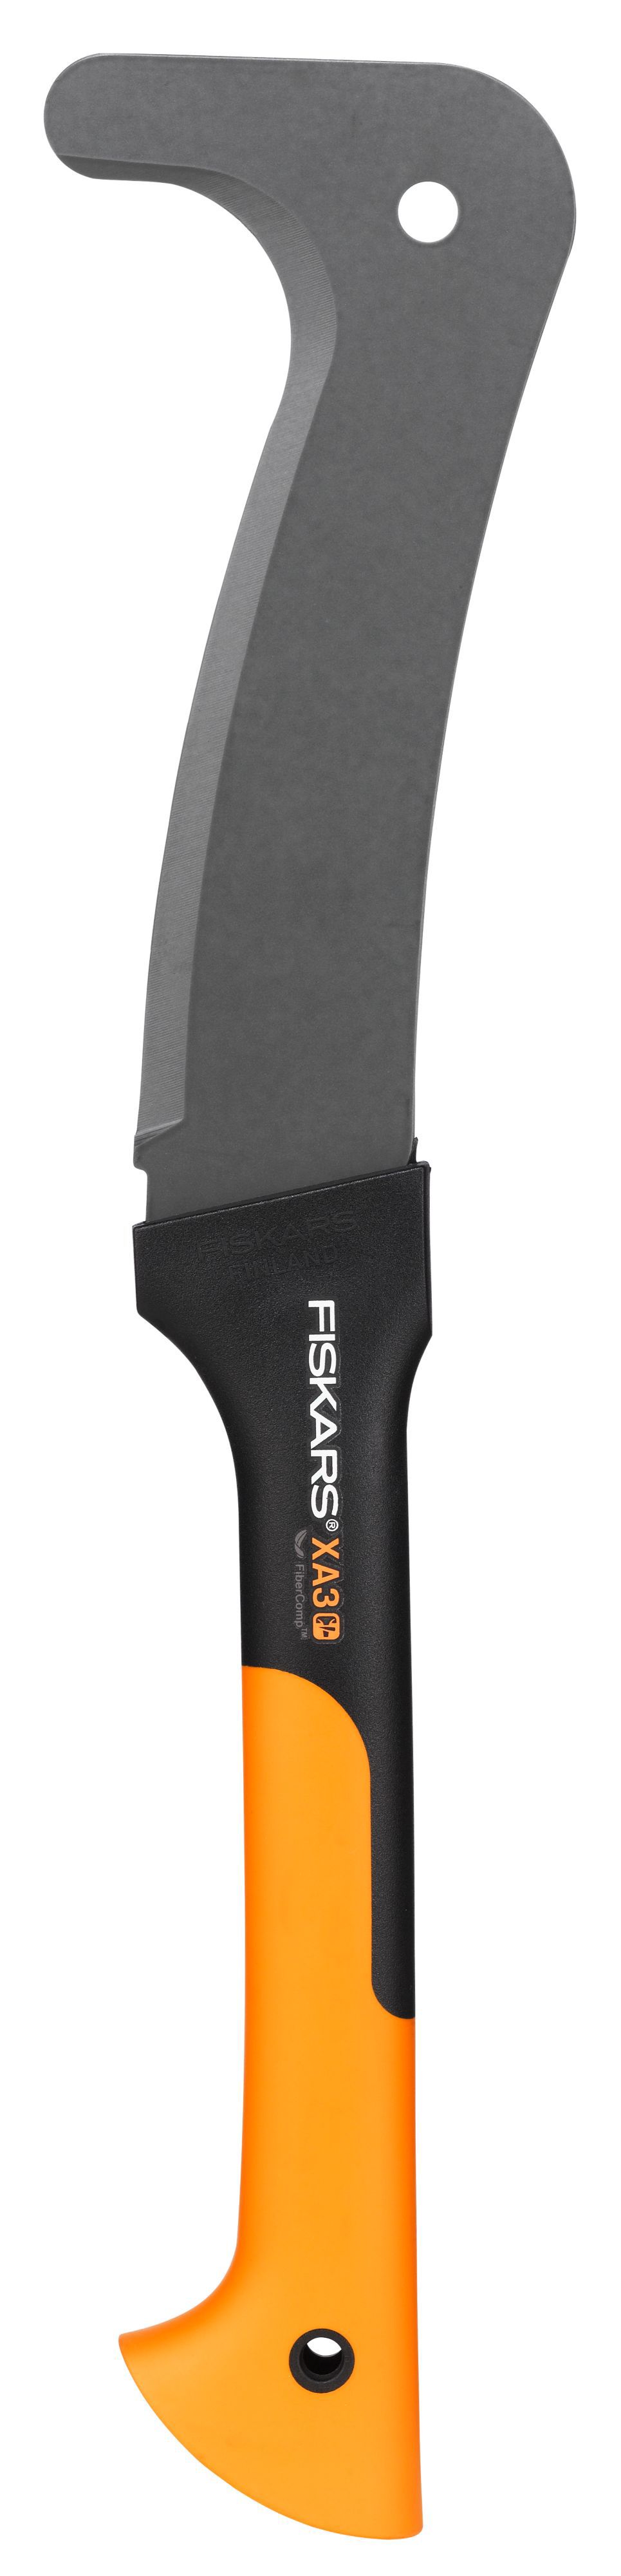 Fiskars Carbon steel Brush hook 0.45kg | Departments | DIY at B&Q